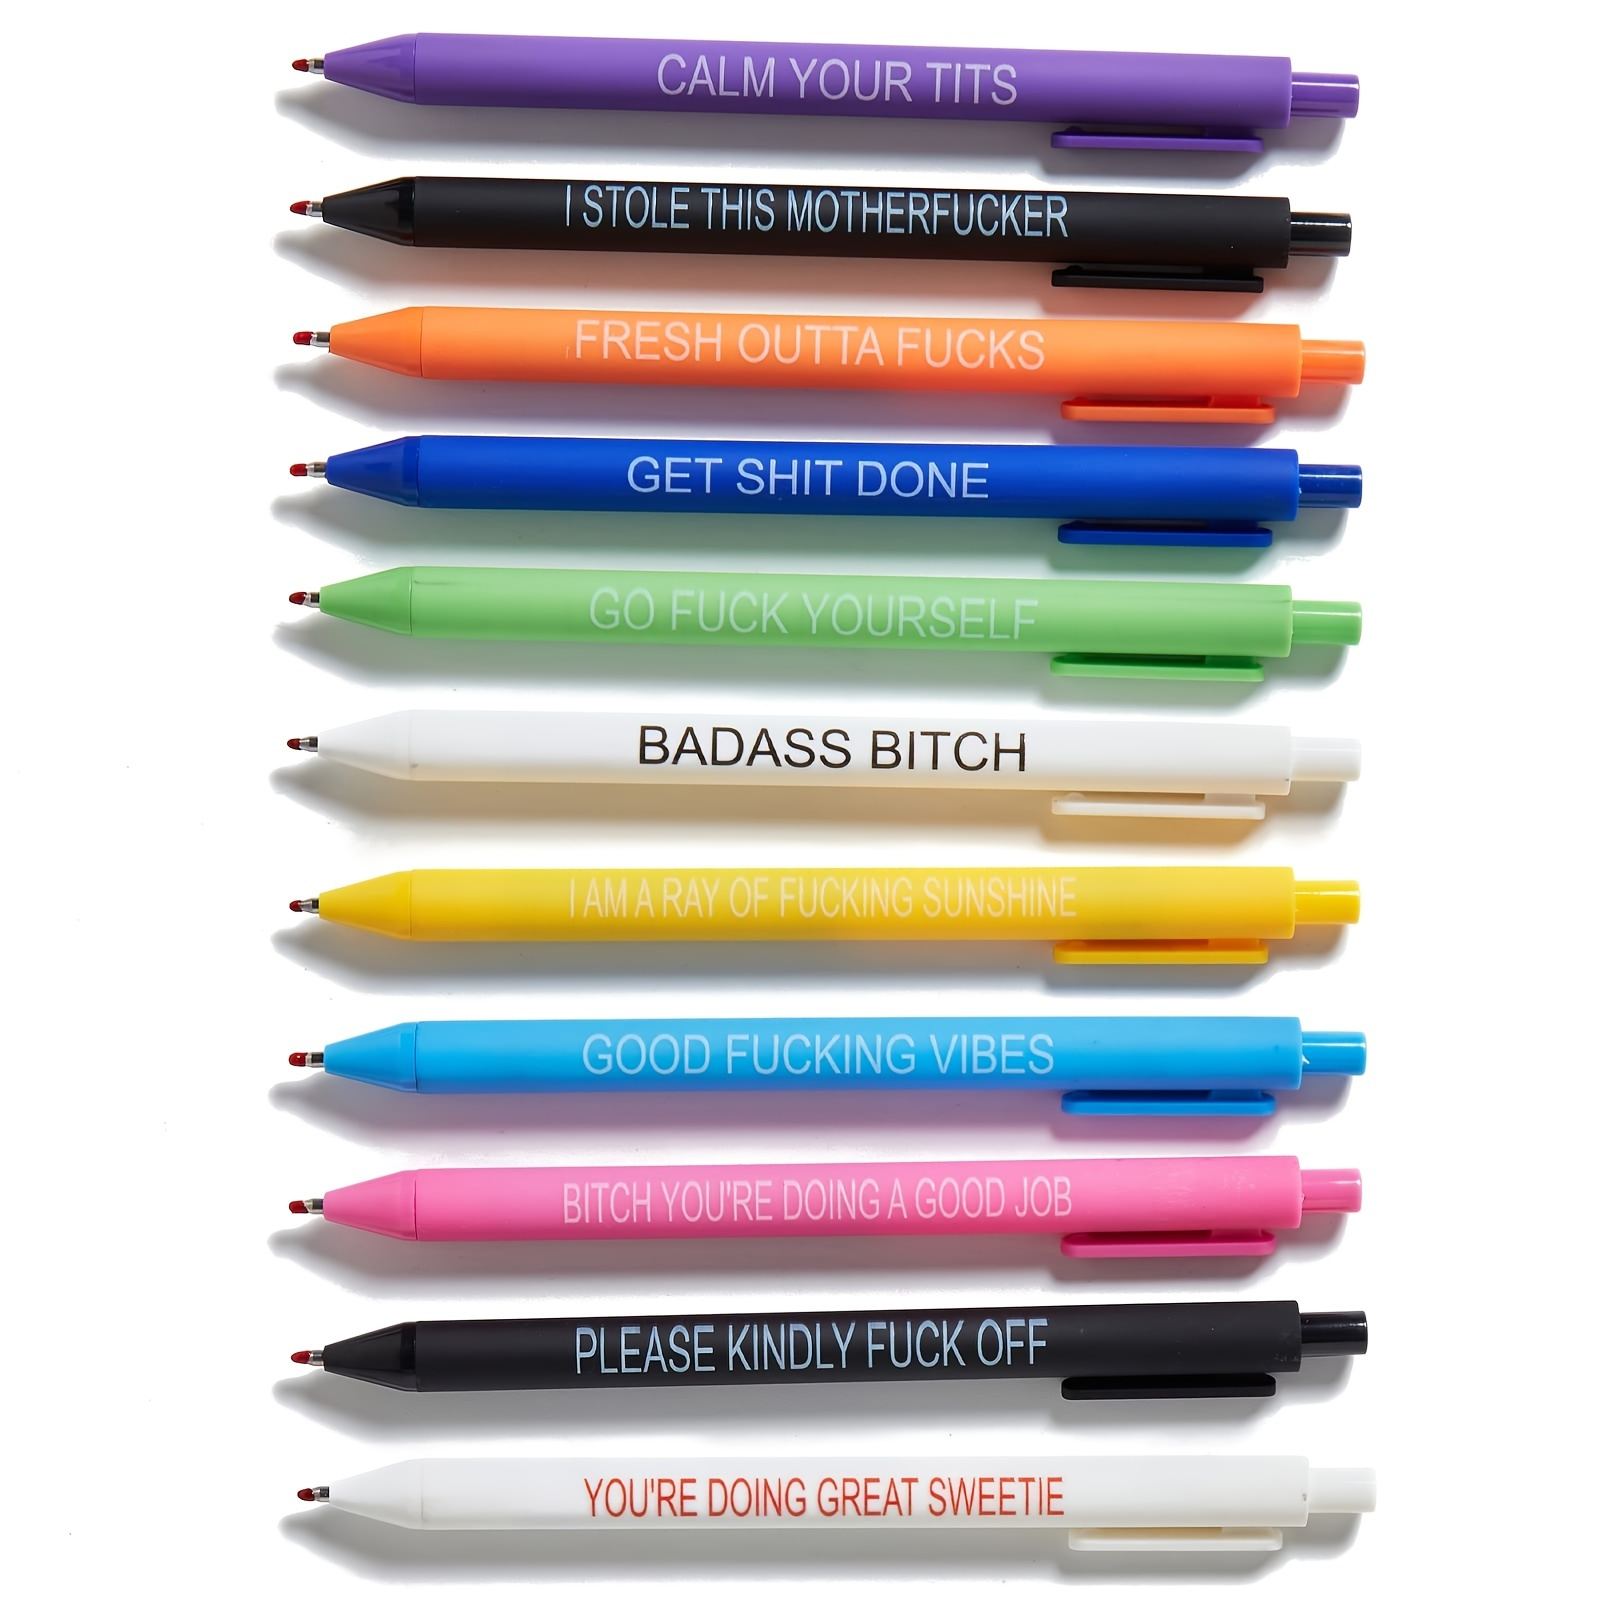 Sweary Day Of The Week Pen Set| Curse Word Pens| Glitter Pens| Humor Pens